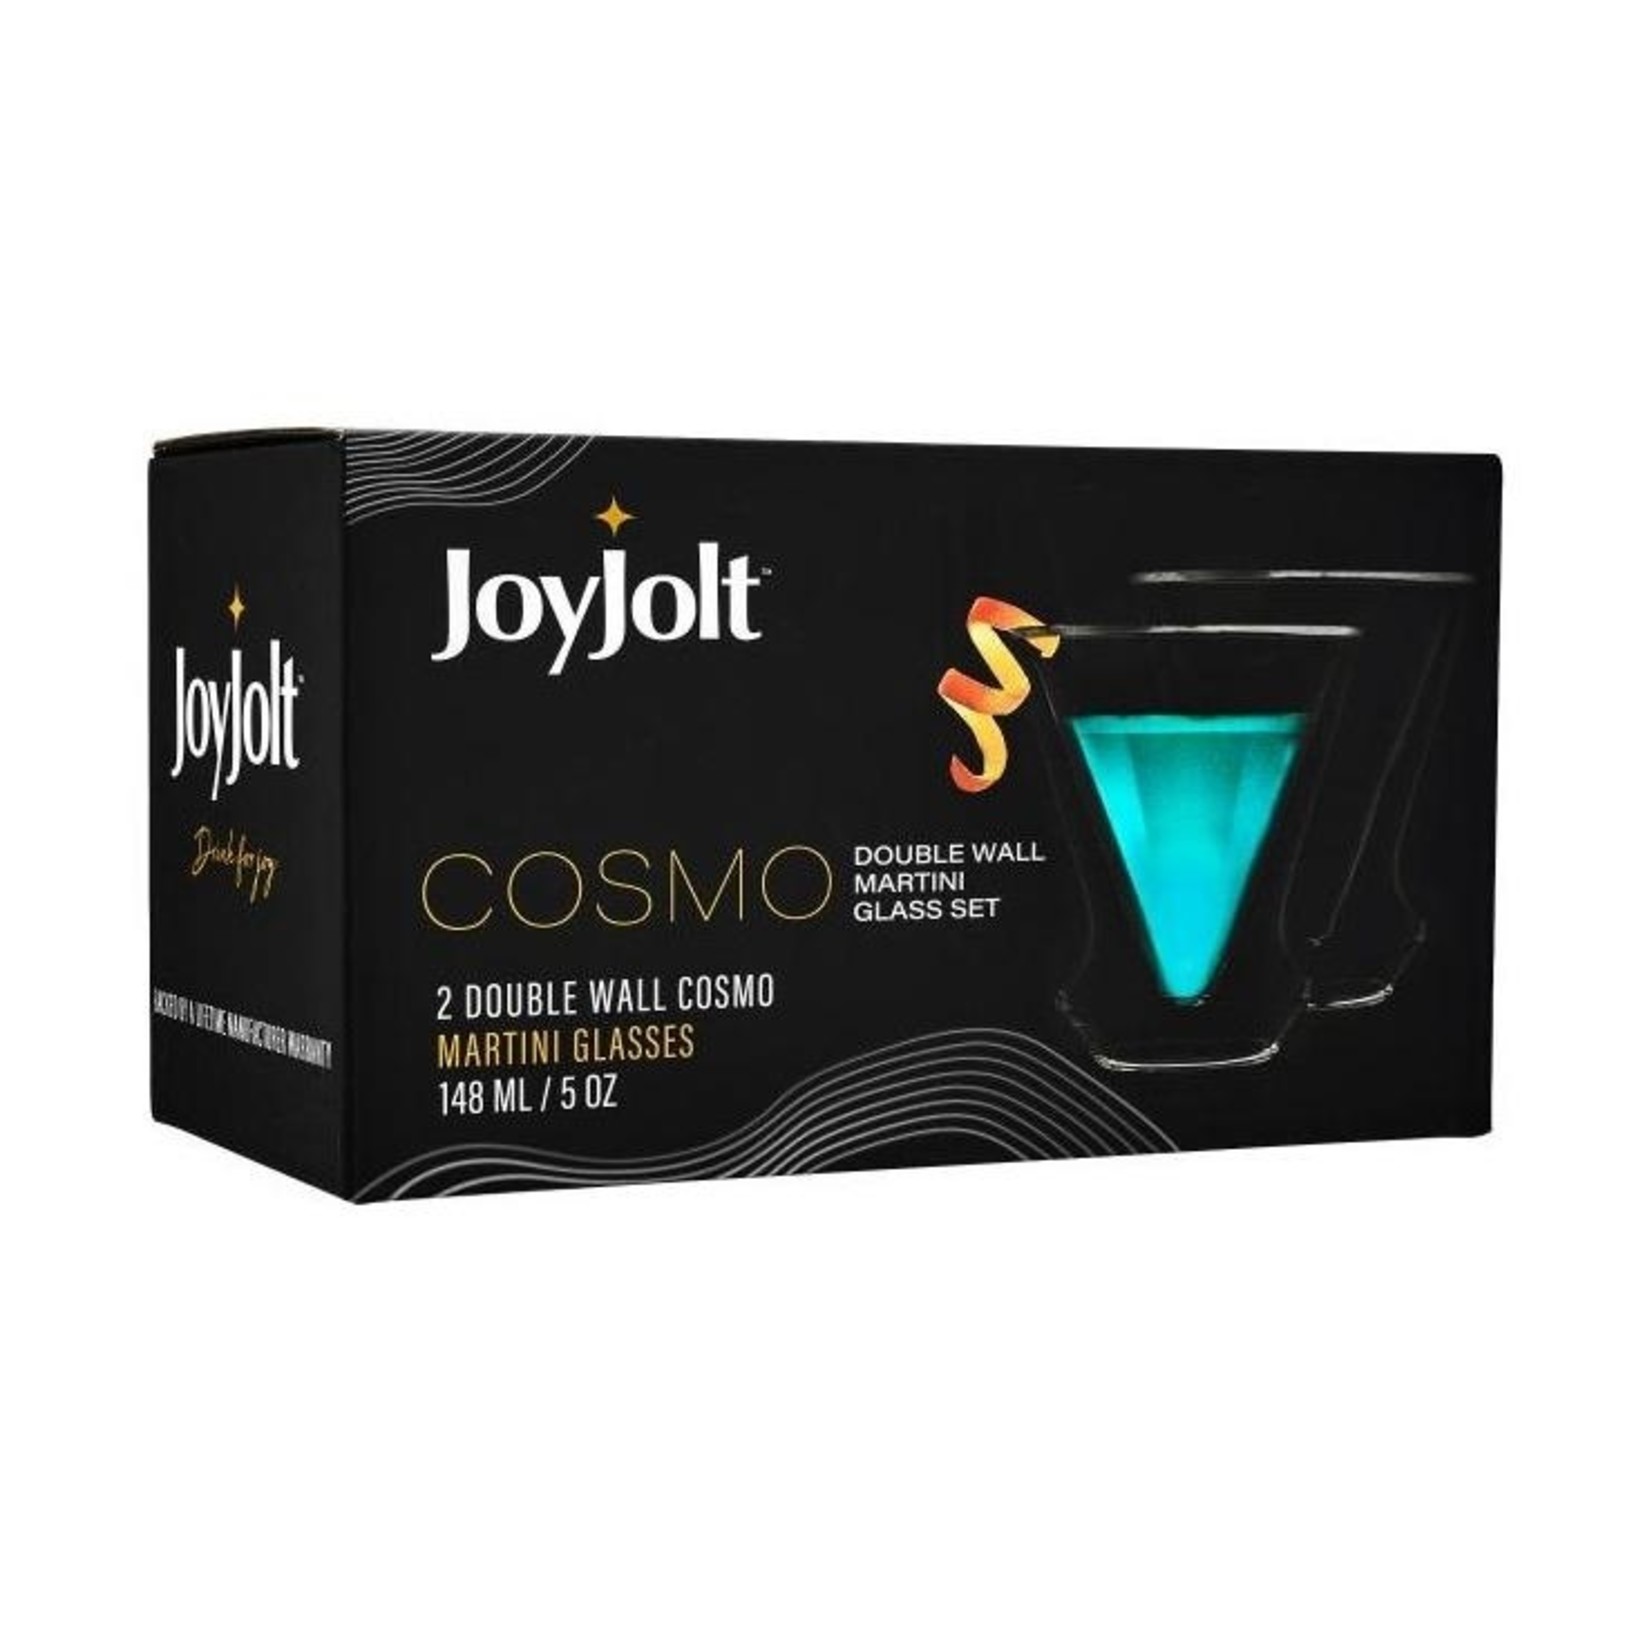 Joy Jolt Cosmos Double Wall Martini Glasses - Set Of 2